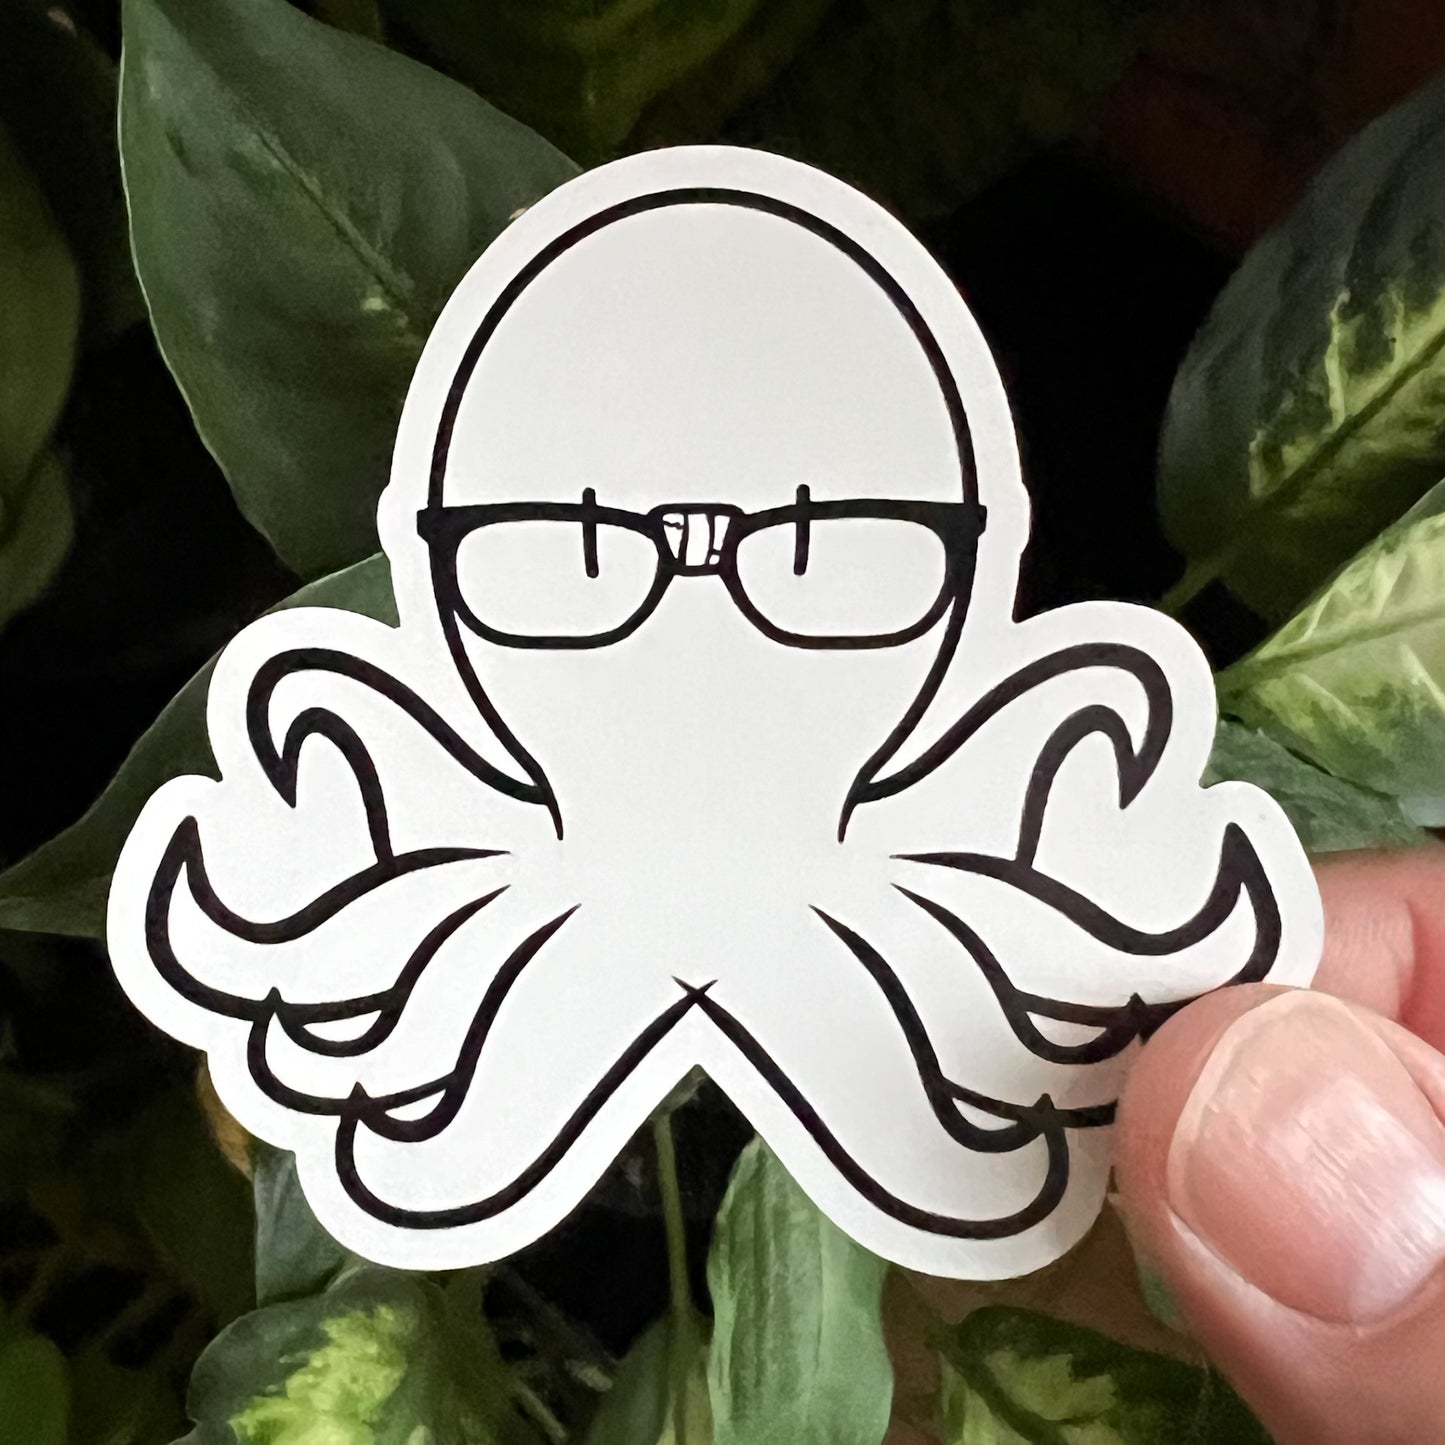 The Nerdy Octopus Logo Magnet